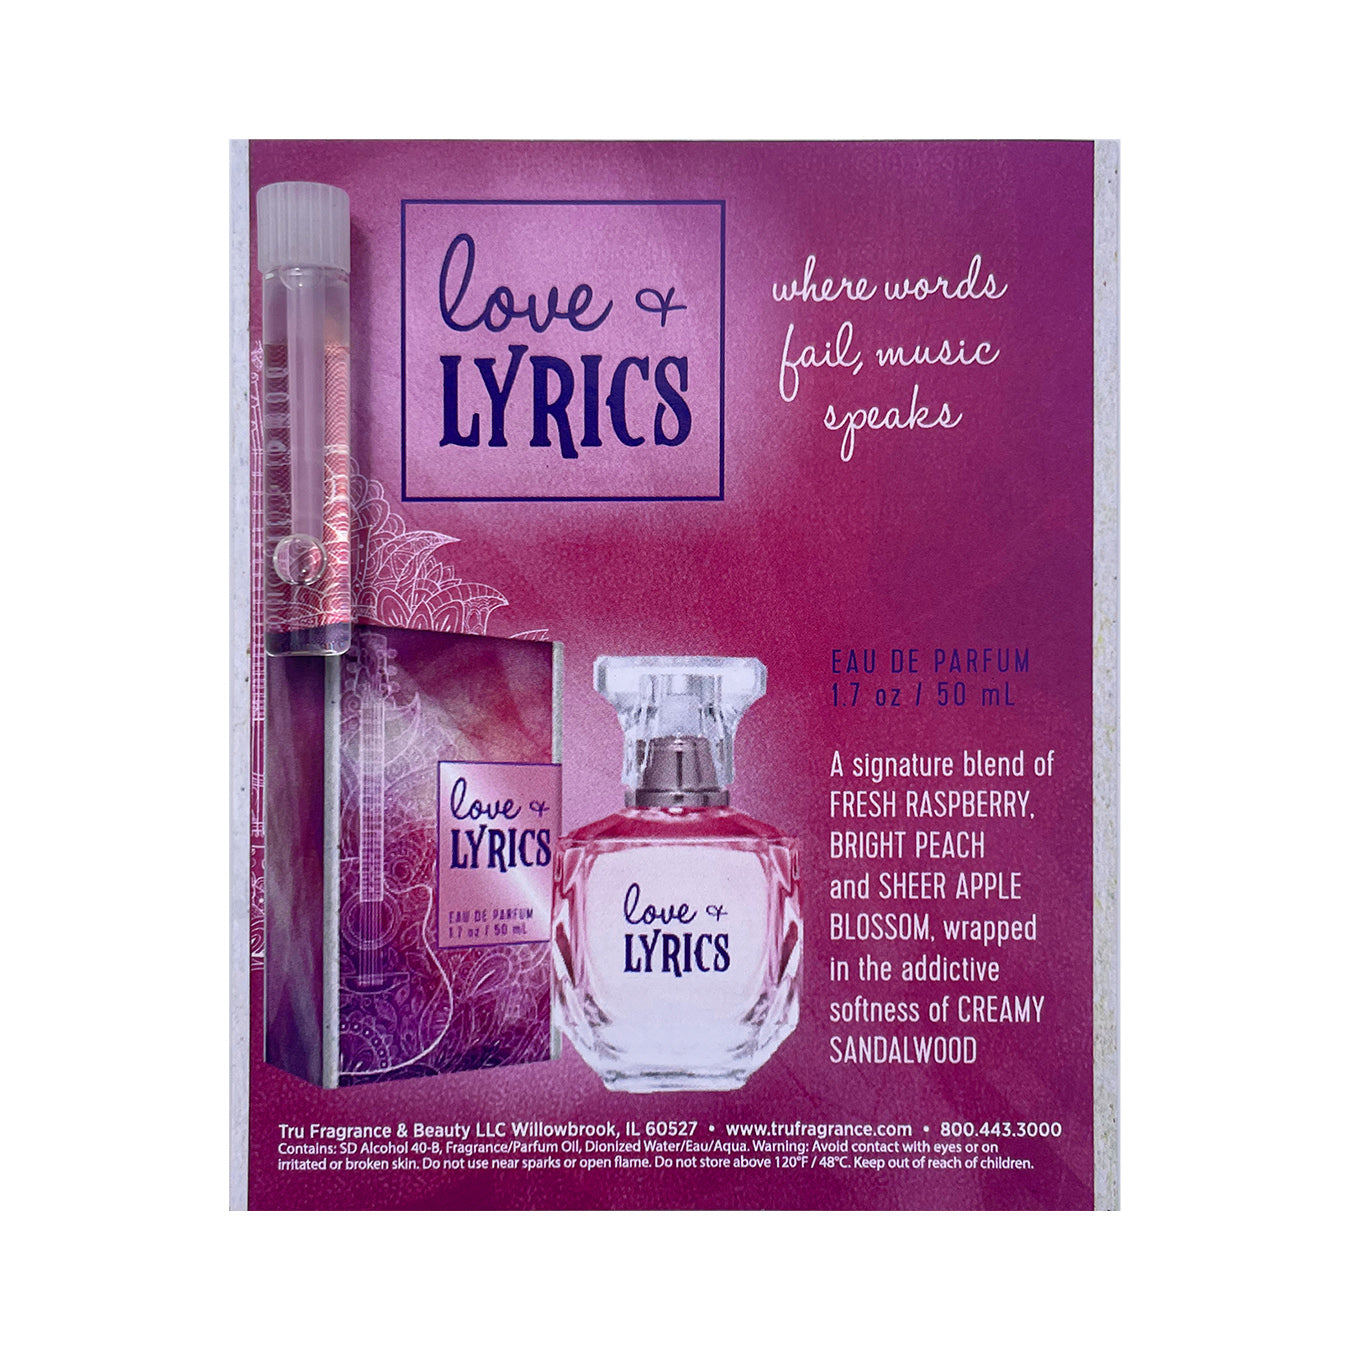 Love & Lyrics Eau de Parfum Sample Size